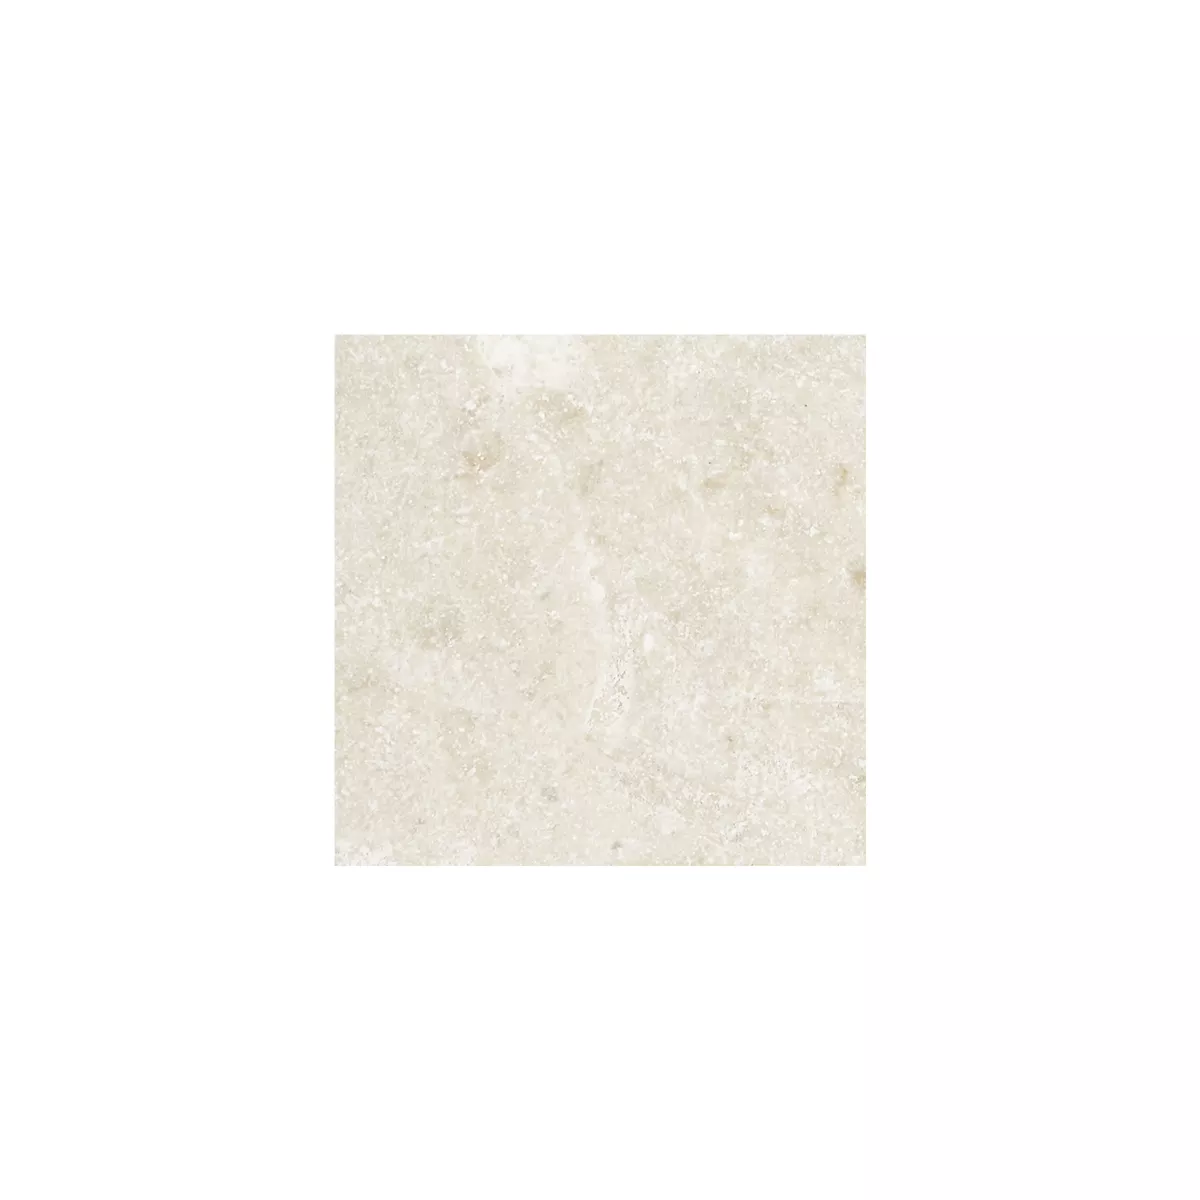 Sample Natural Stone Tiles Marble Afyon Beige 10x10cm